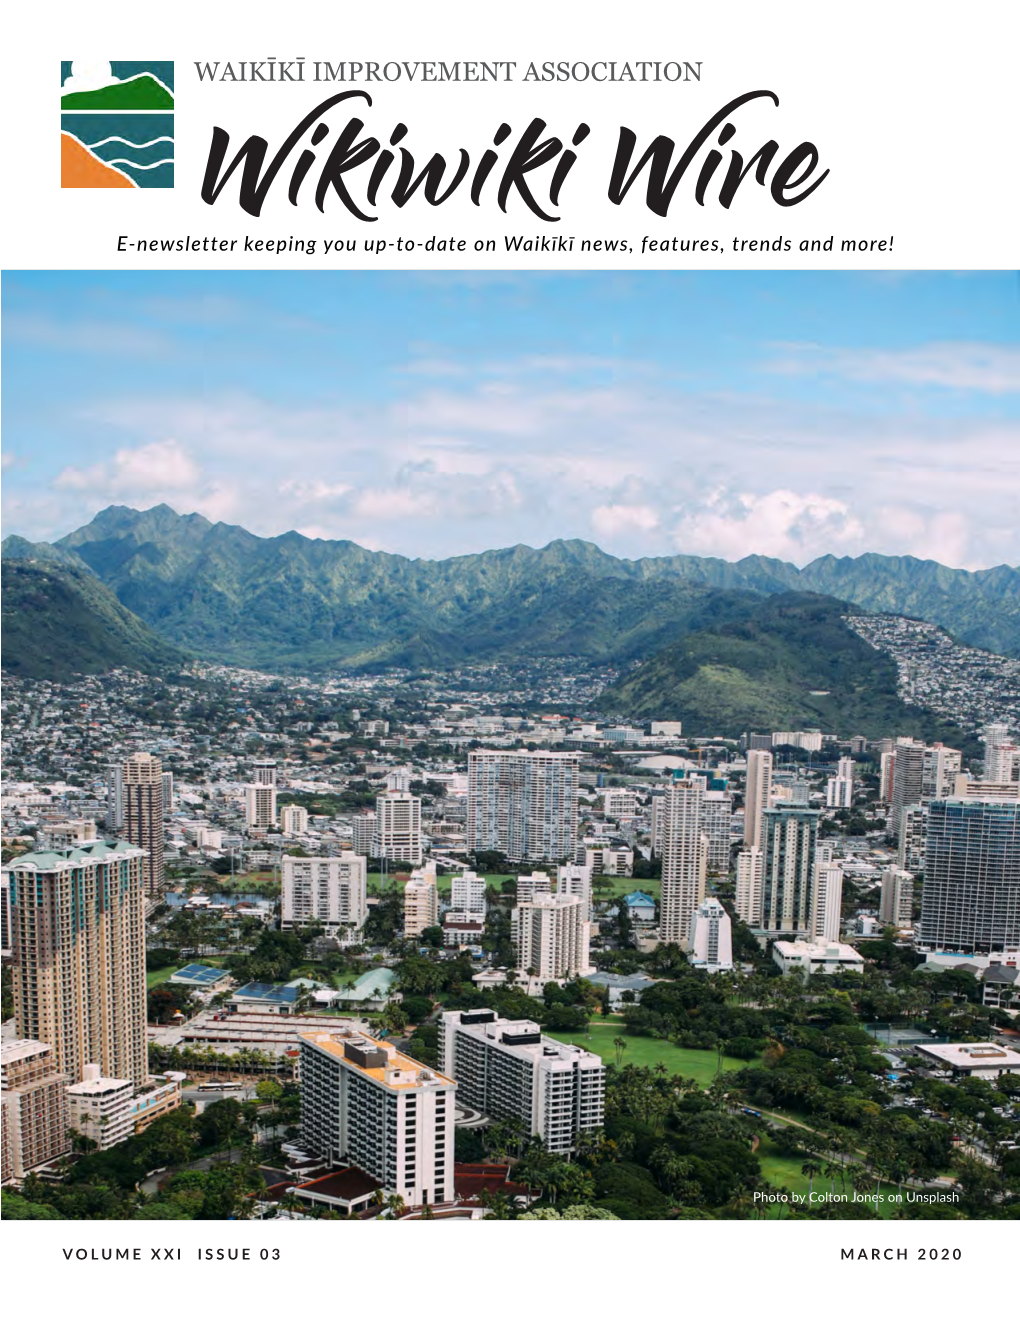 WAIKĪKĪ IMPROVEMENT ASSOCIATION Wikiwiki Wire E-Newsletter Keeping You Up-To-Date on Waikīkī News, Features, Trends and More!